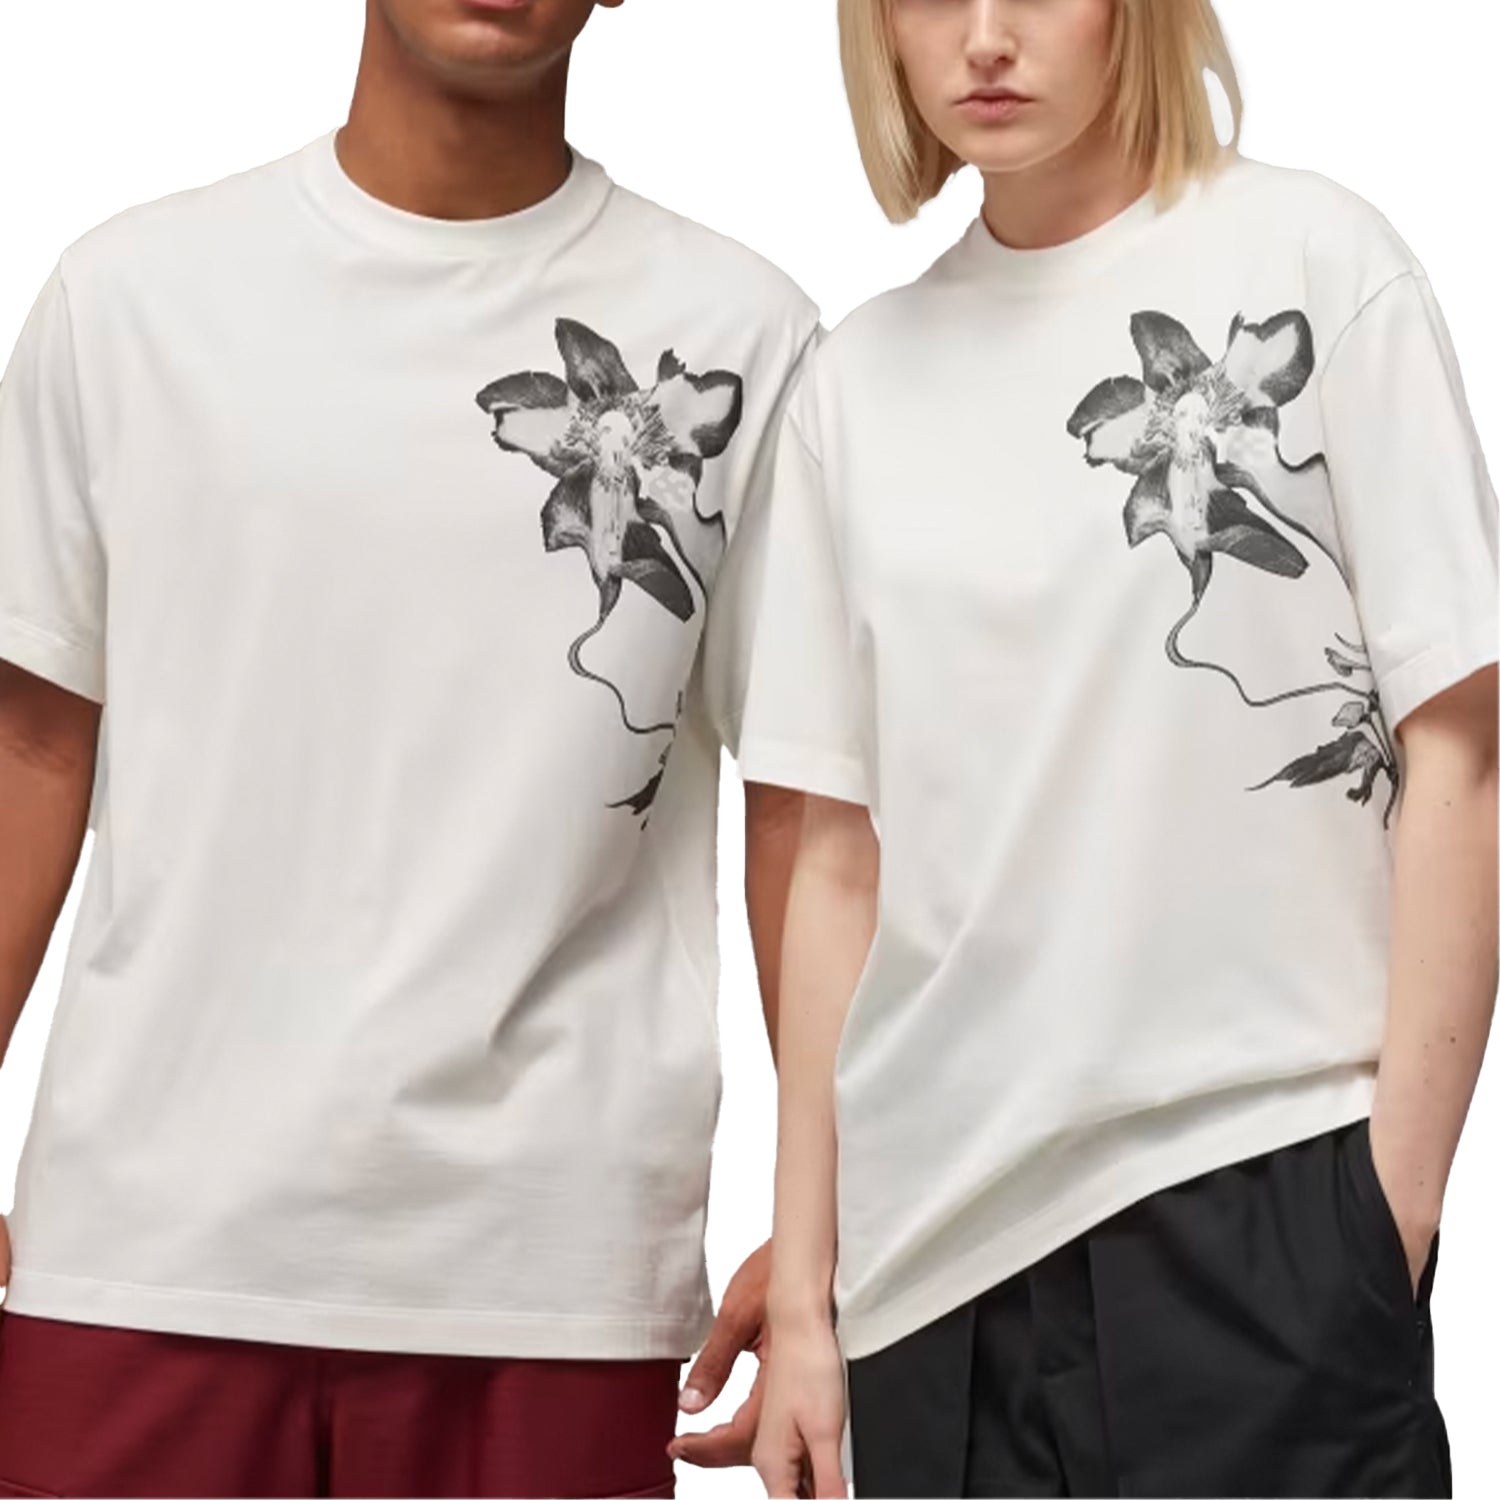 Y-3 Graphic T-Shirt - INVINCIBLE